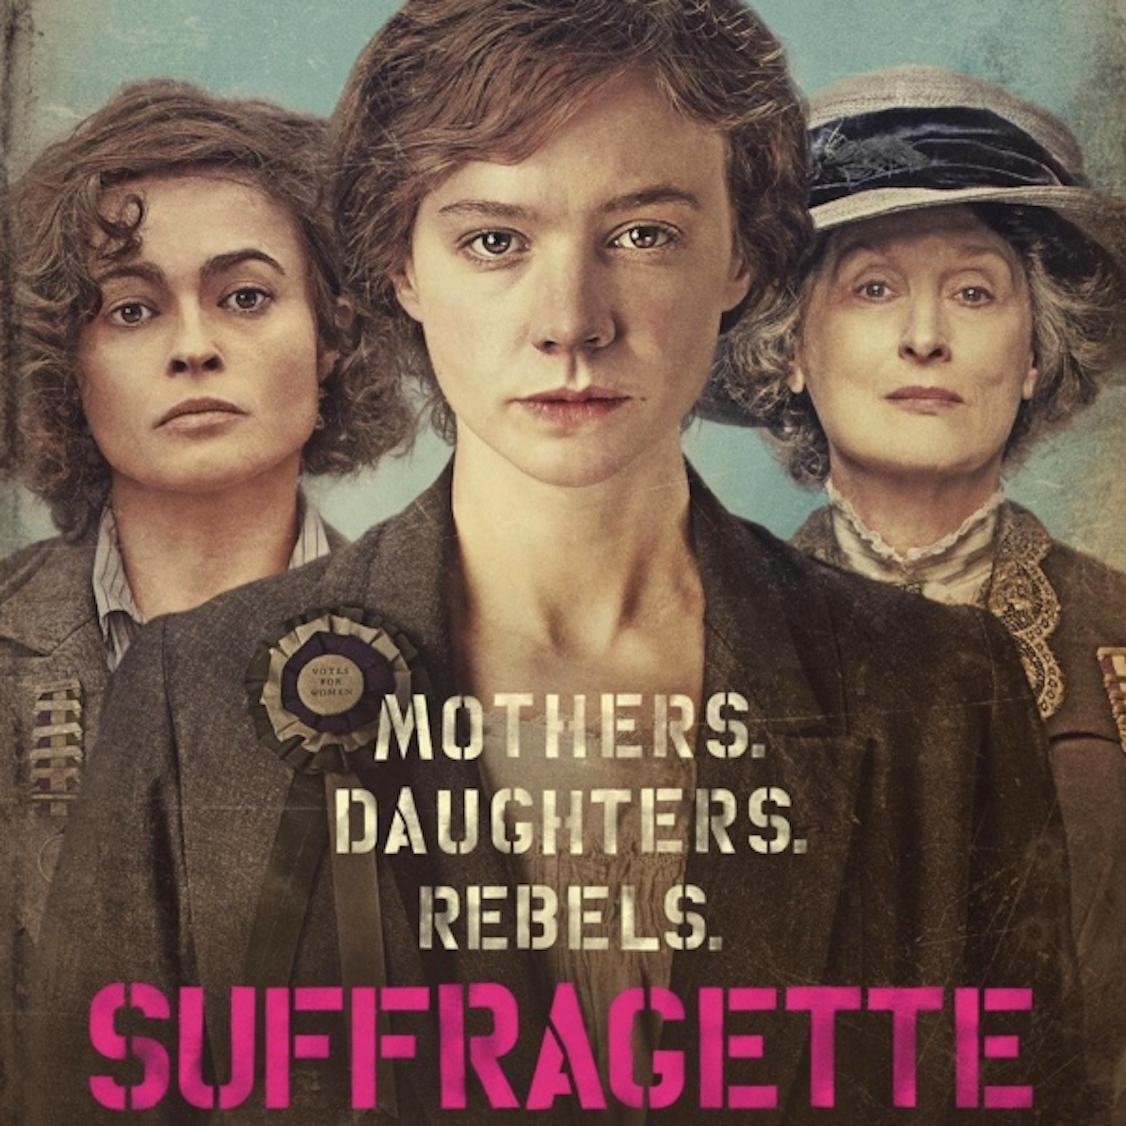 ‘Suffragette’ Film Review